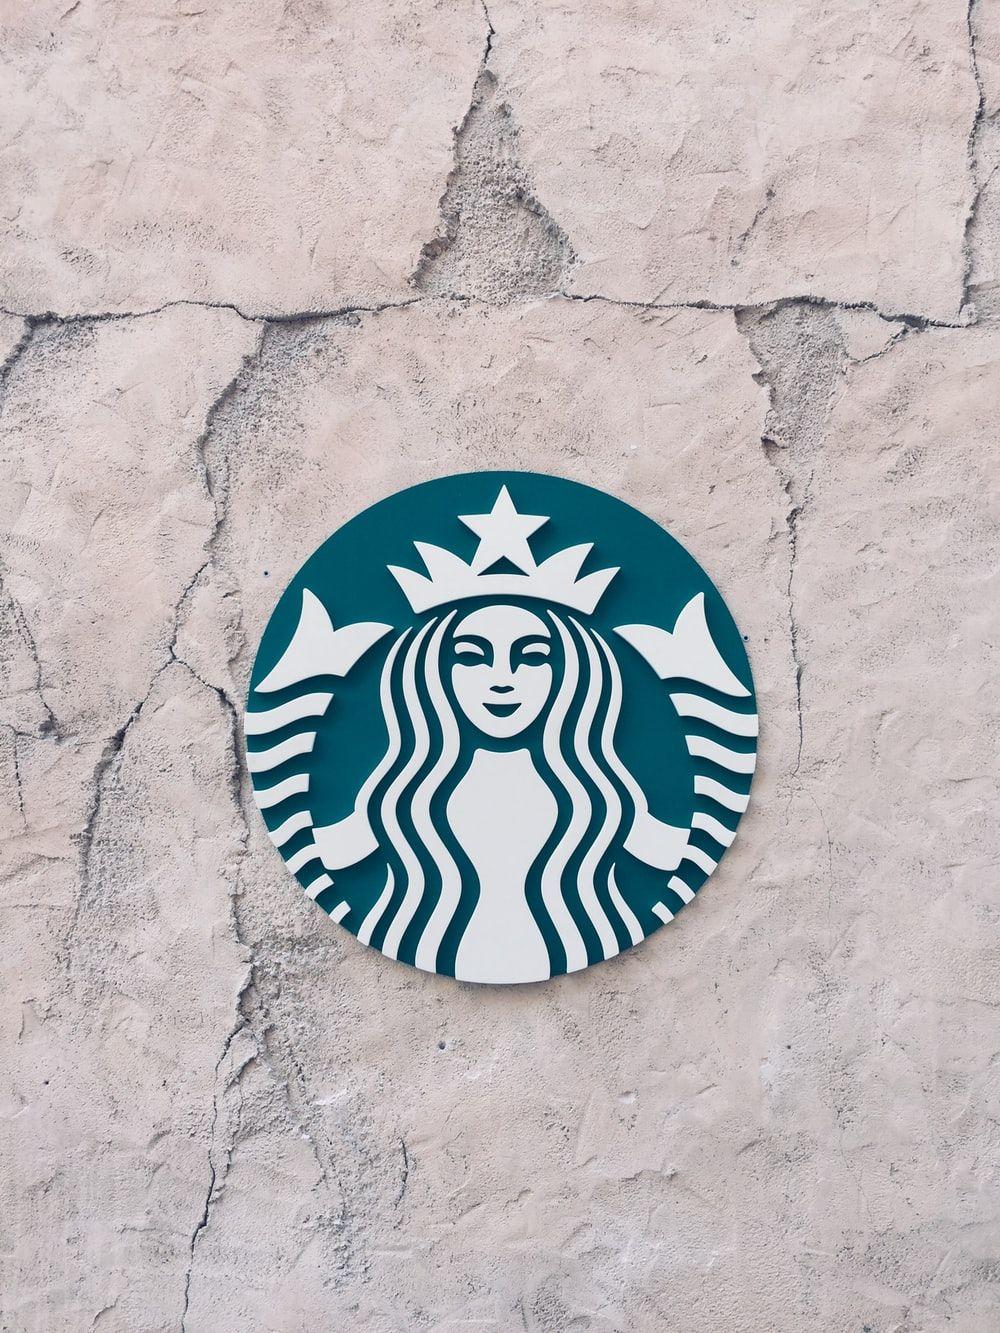 Starbucks Wallpaper Phone - Wallpaperforu